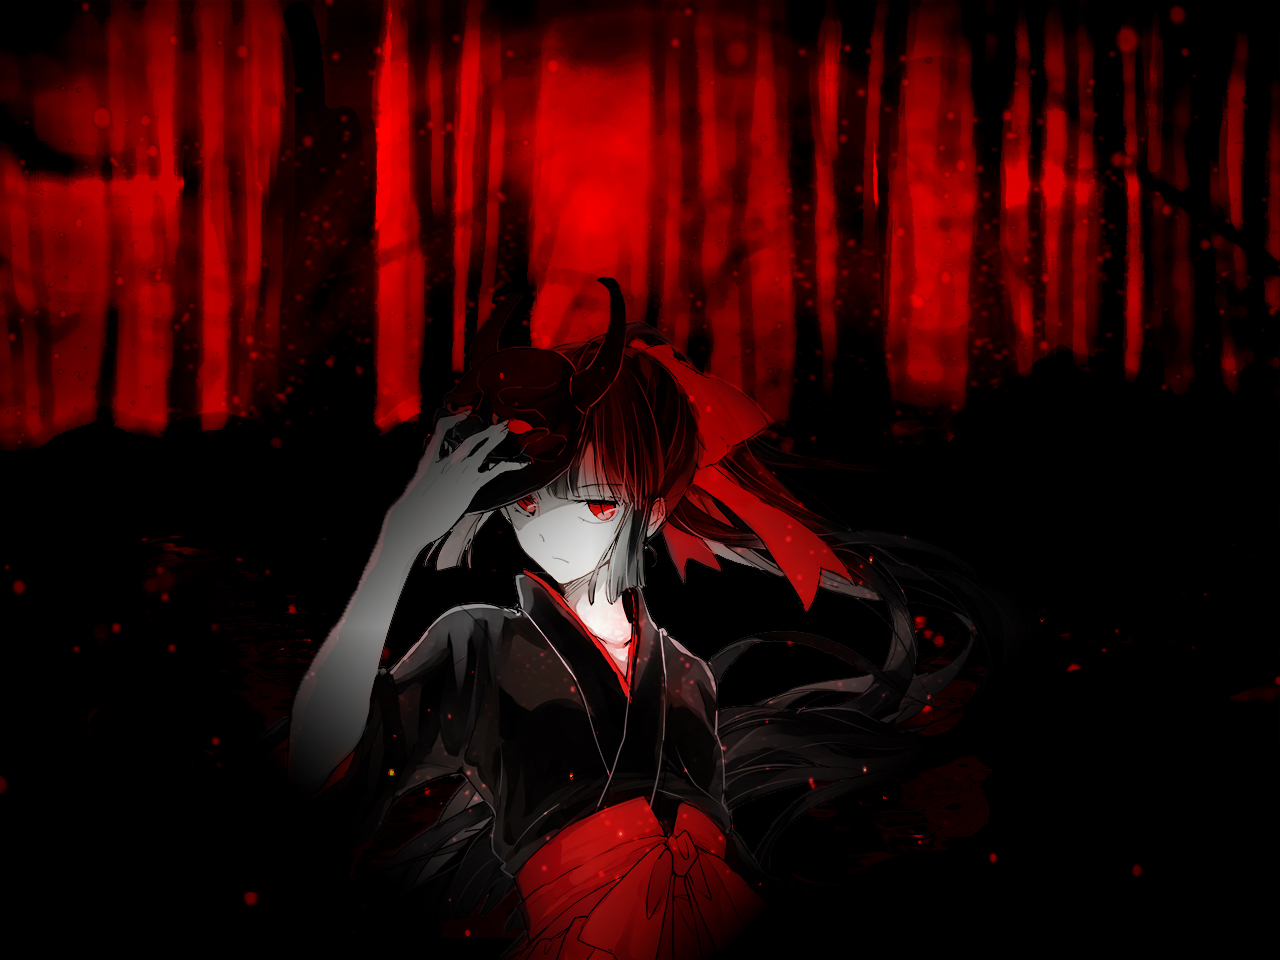 Demon Aka Blood anime Girl - Wallpaper by kirigawakazuto on DeviantArt